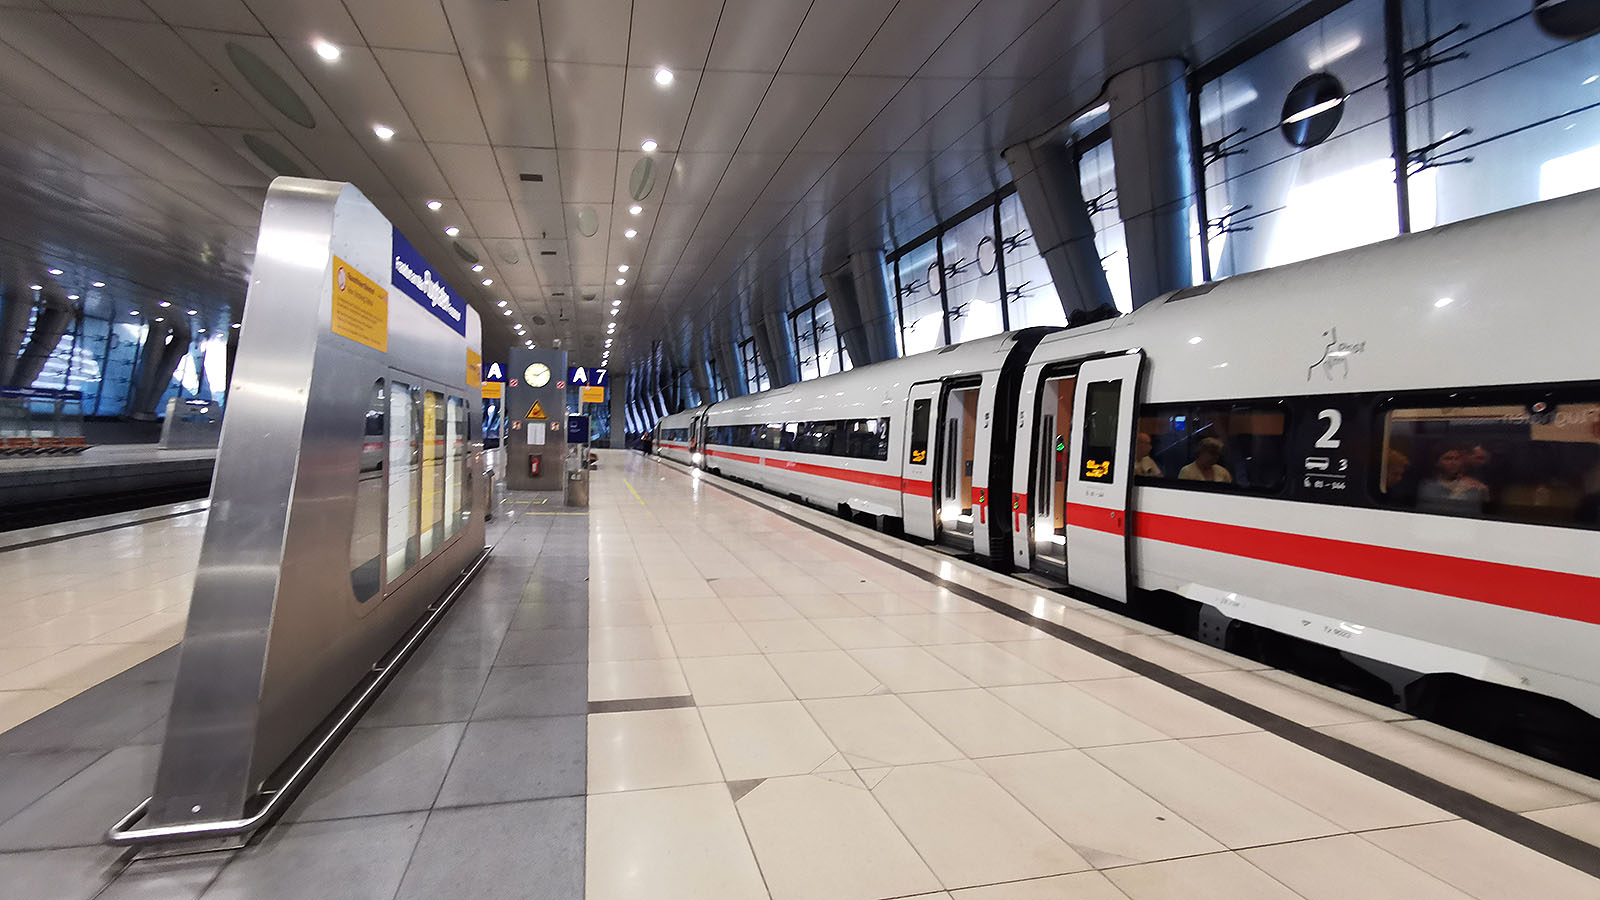 High-speed train on the platform at Frankfurt Airport